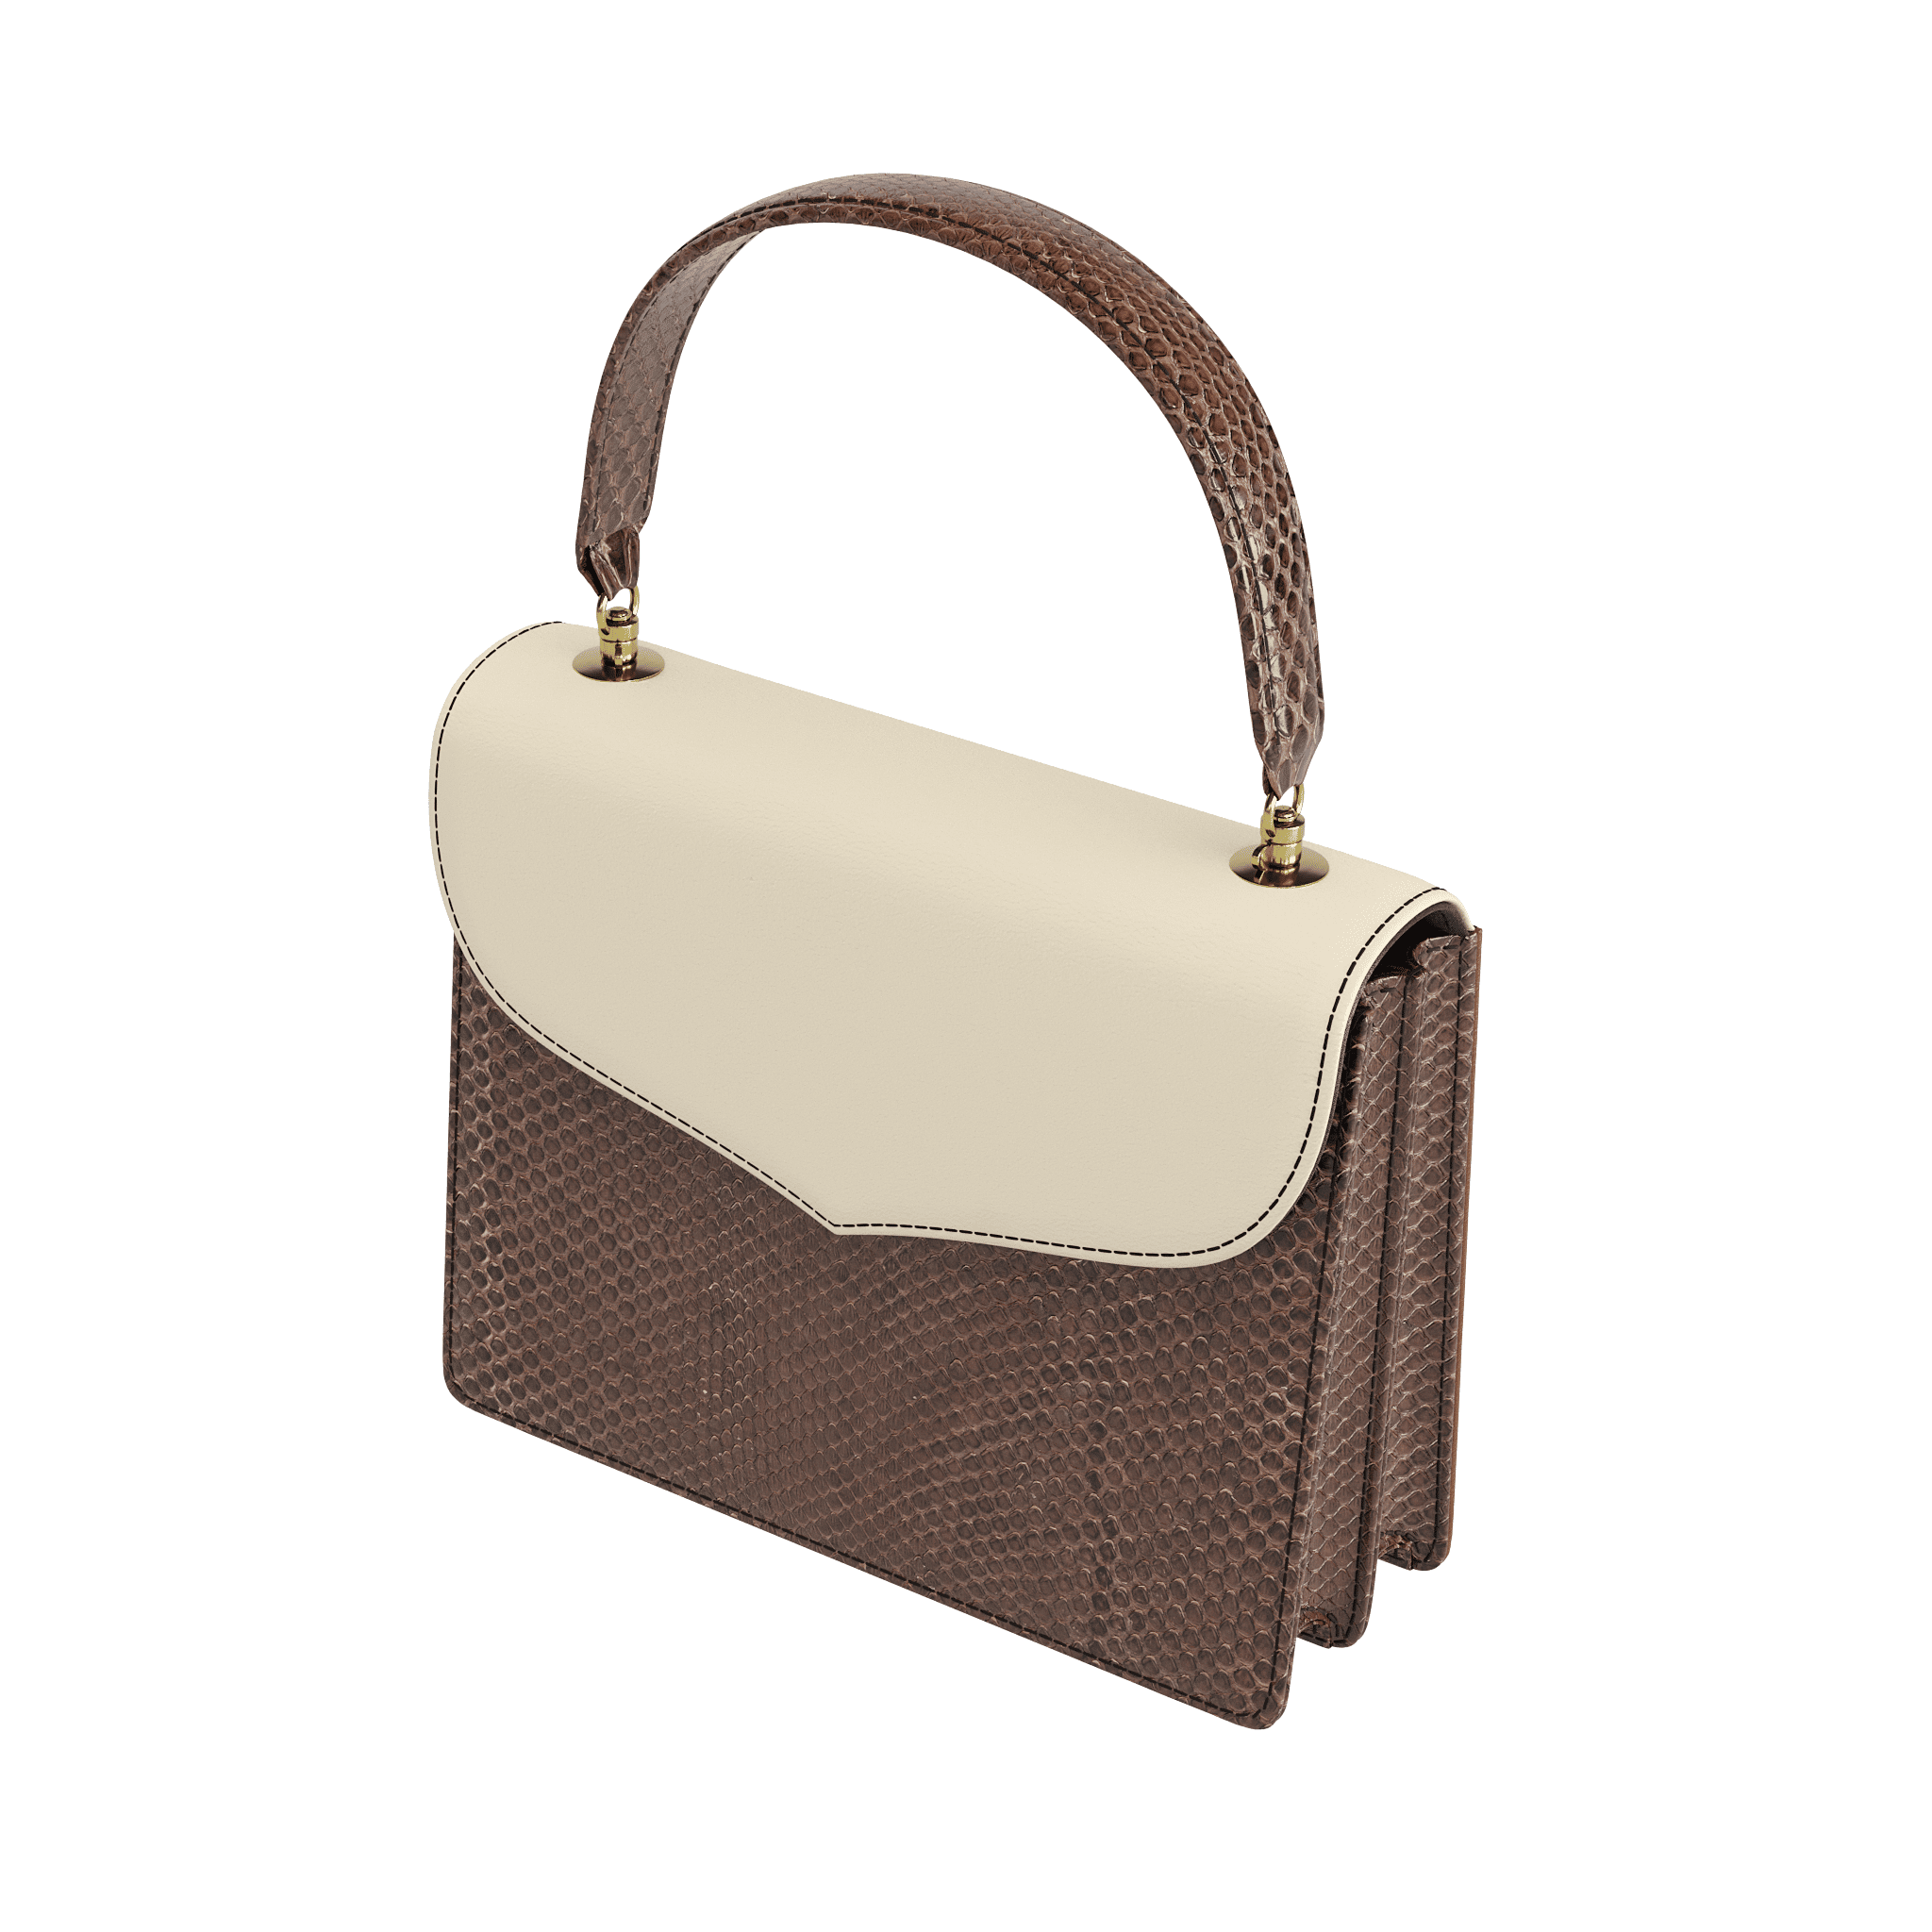 Fine Scale Brown Python Handbag With Cream Top Flap